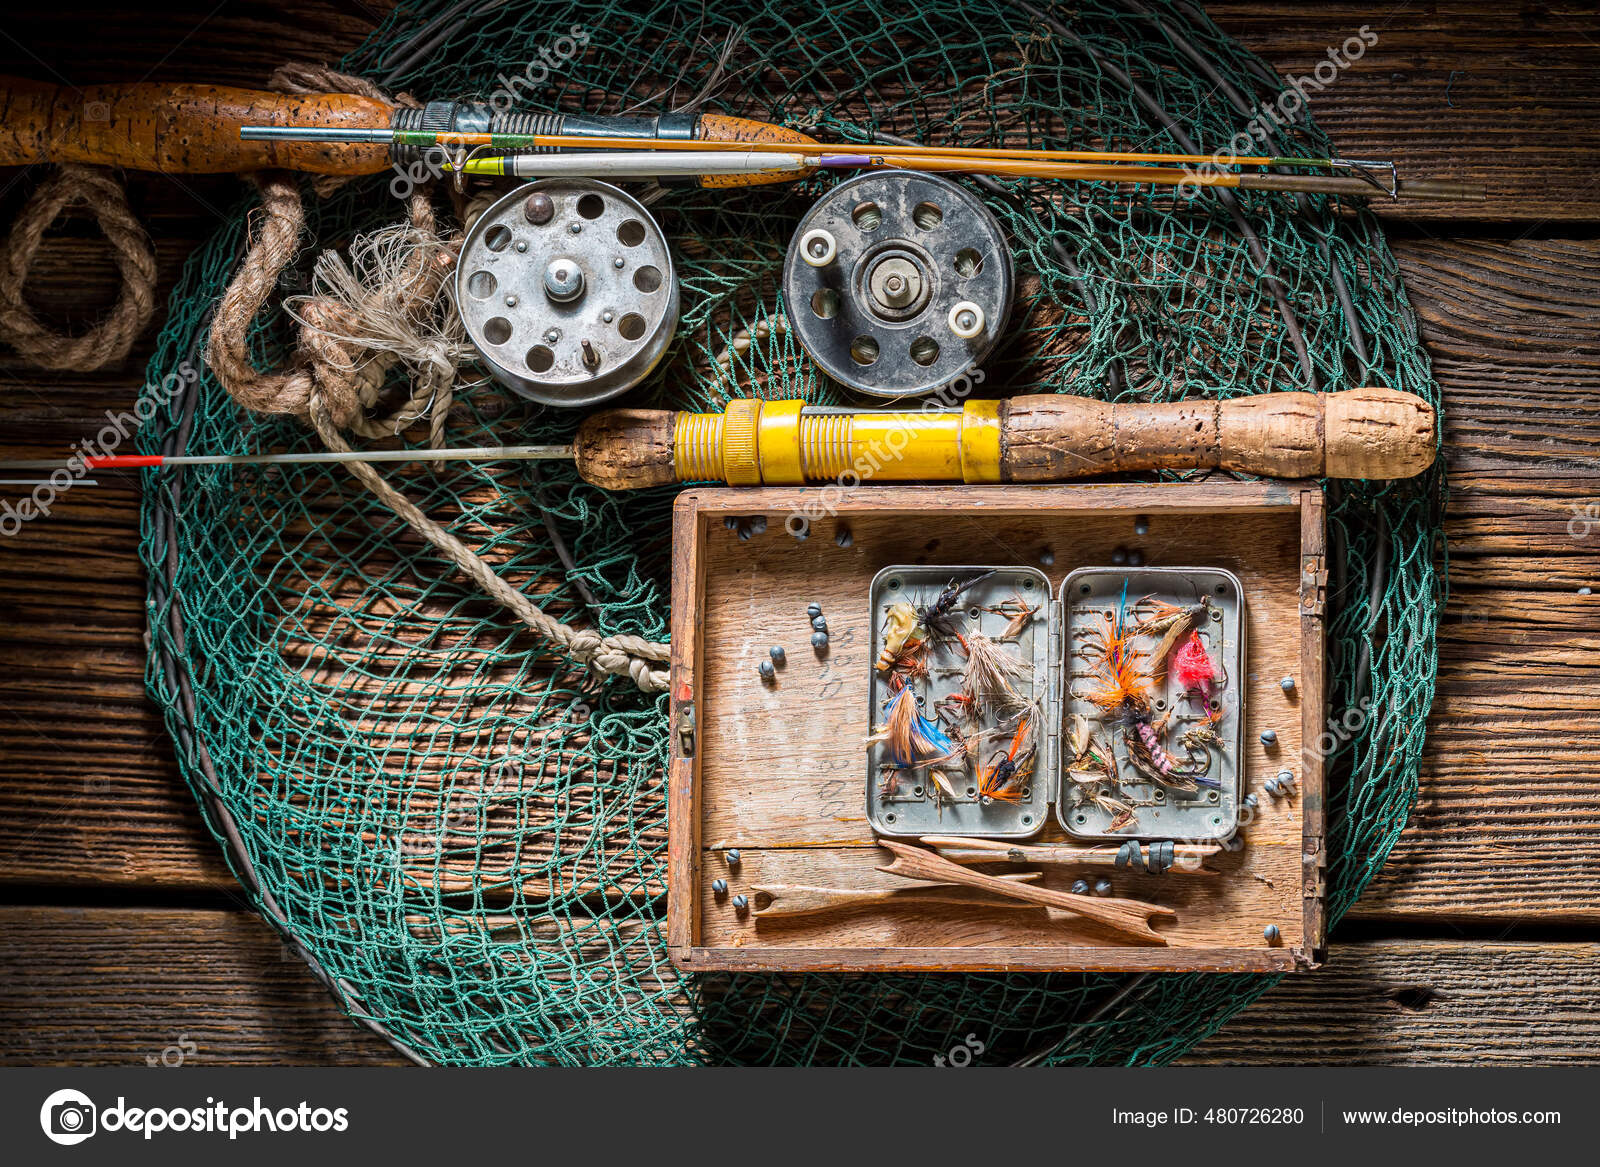 https://st2.depositphotos.com/1158226/48072/i/1600/depositphotos_480726280-stock-photo-vintage-fishing-equipment-flies-rods.jpg